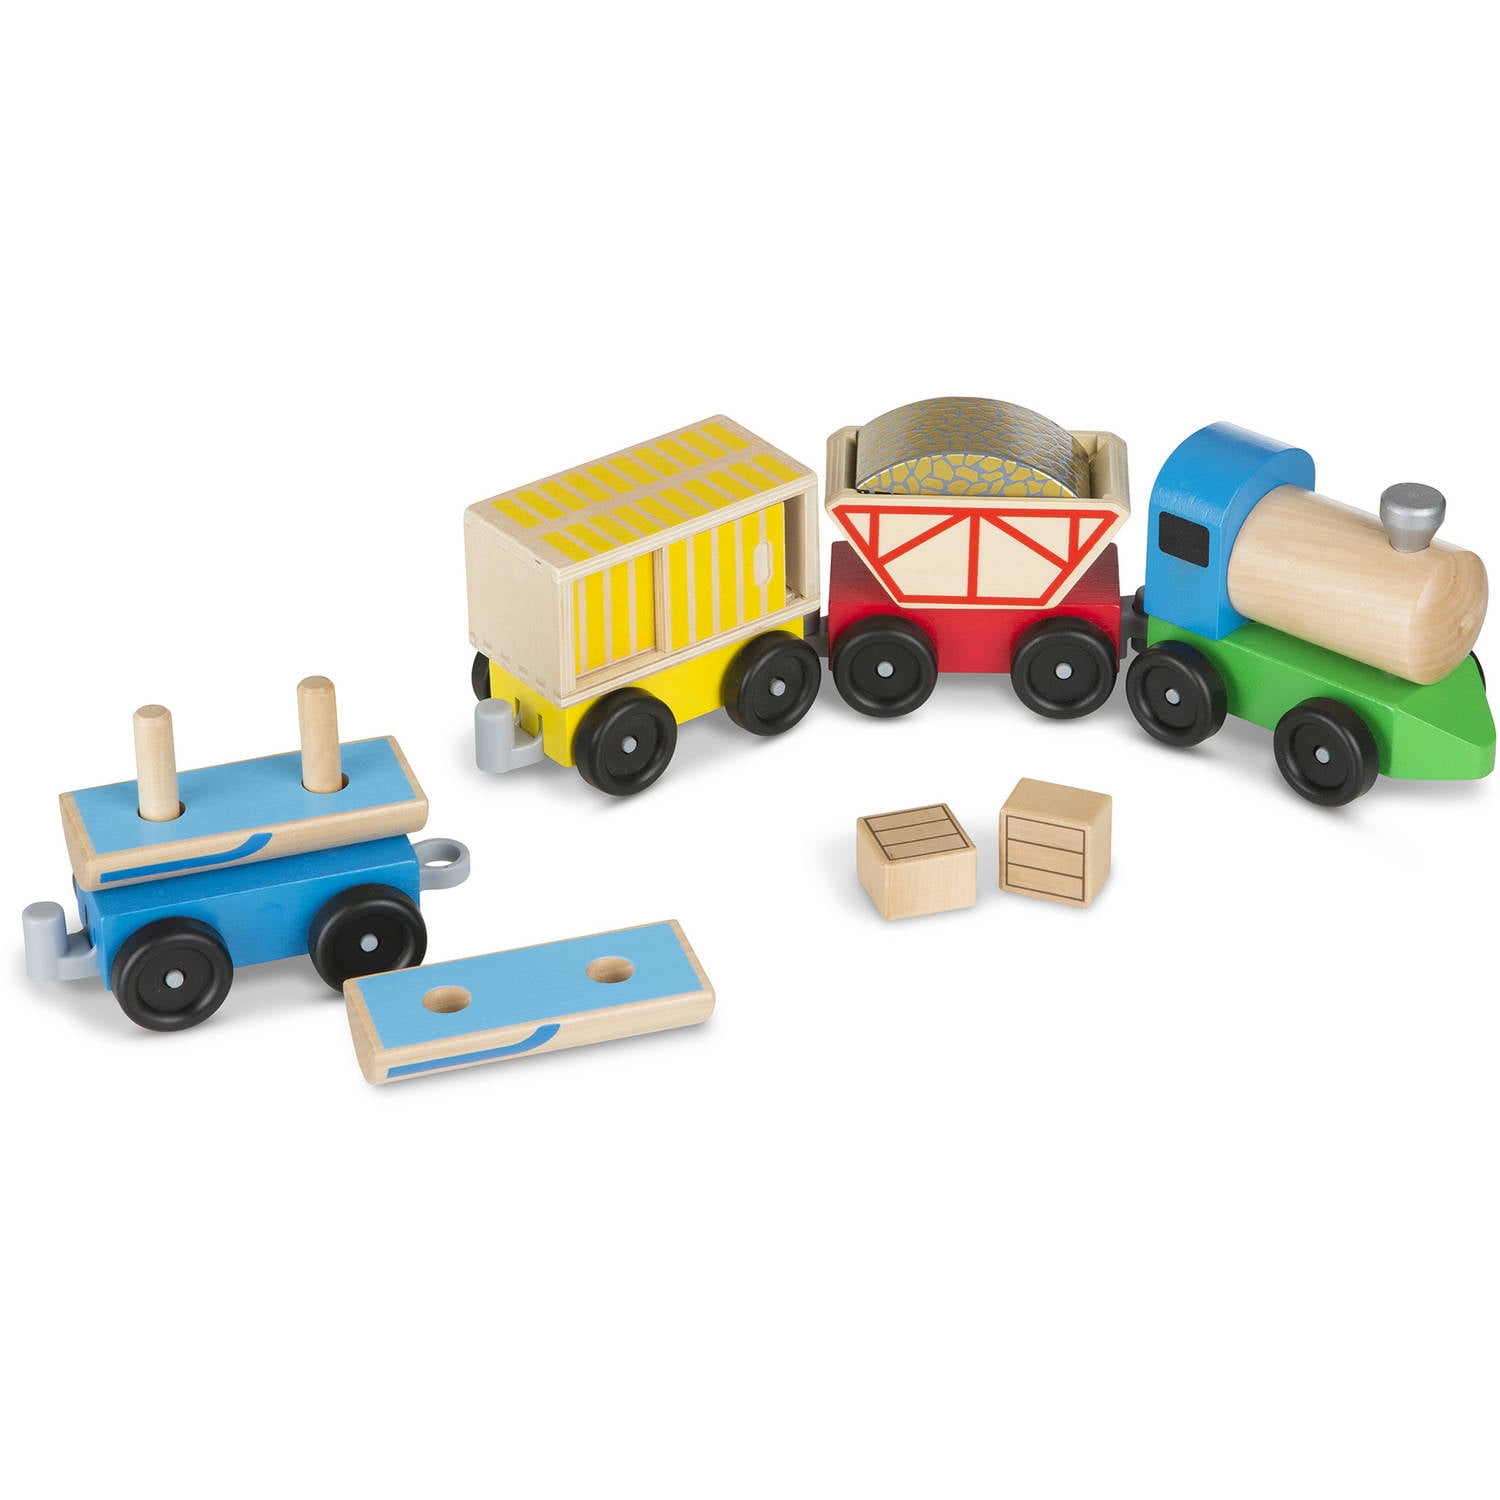 3 linking cars Classic Wooden Toy Melissa & Doug Wooden Farm Train Set